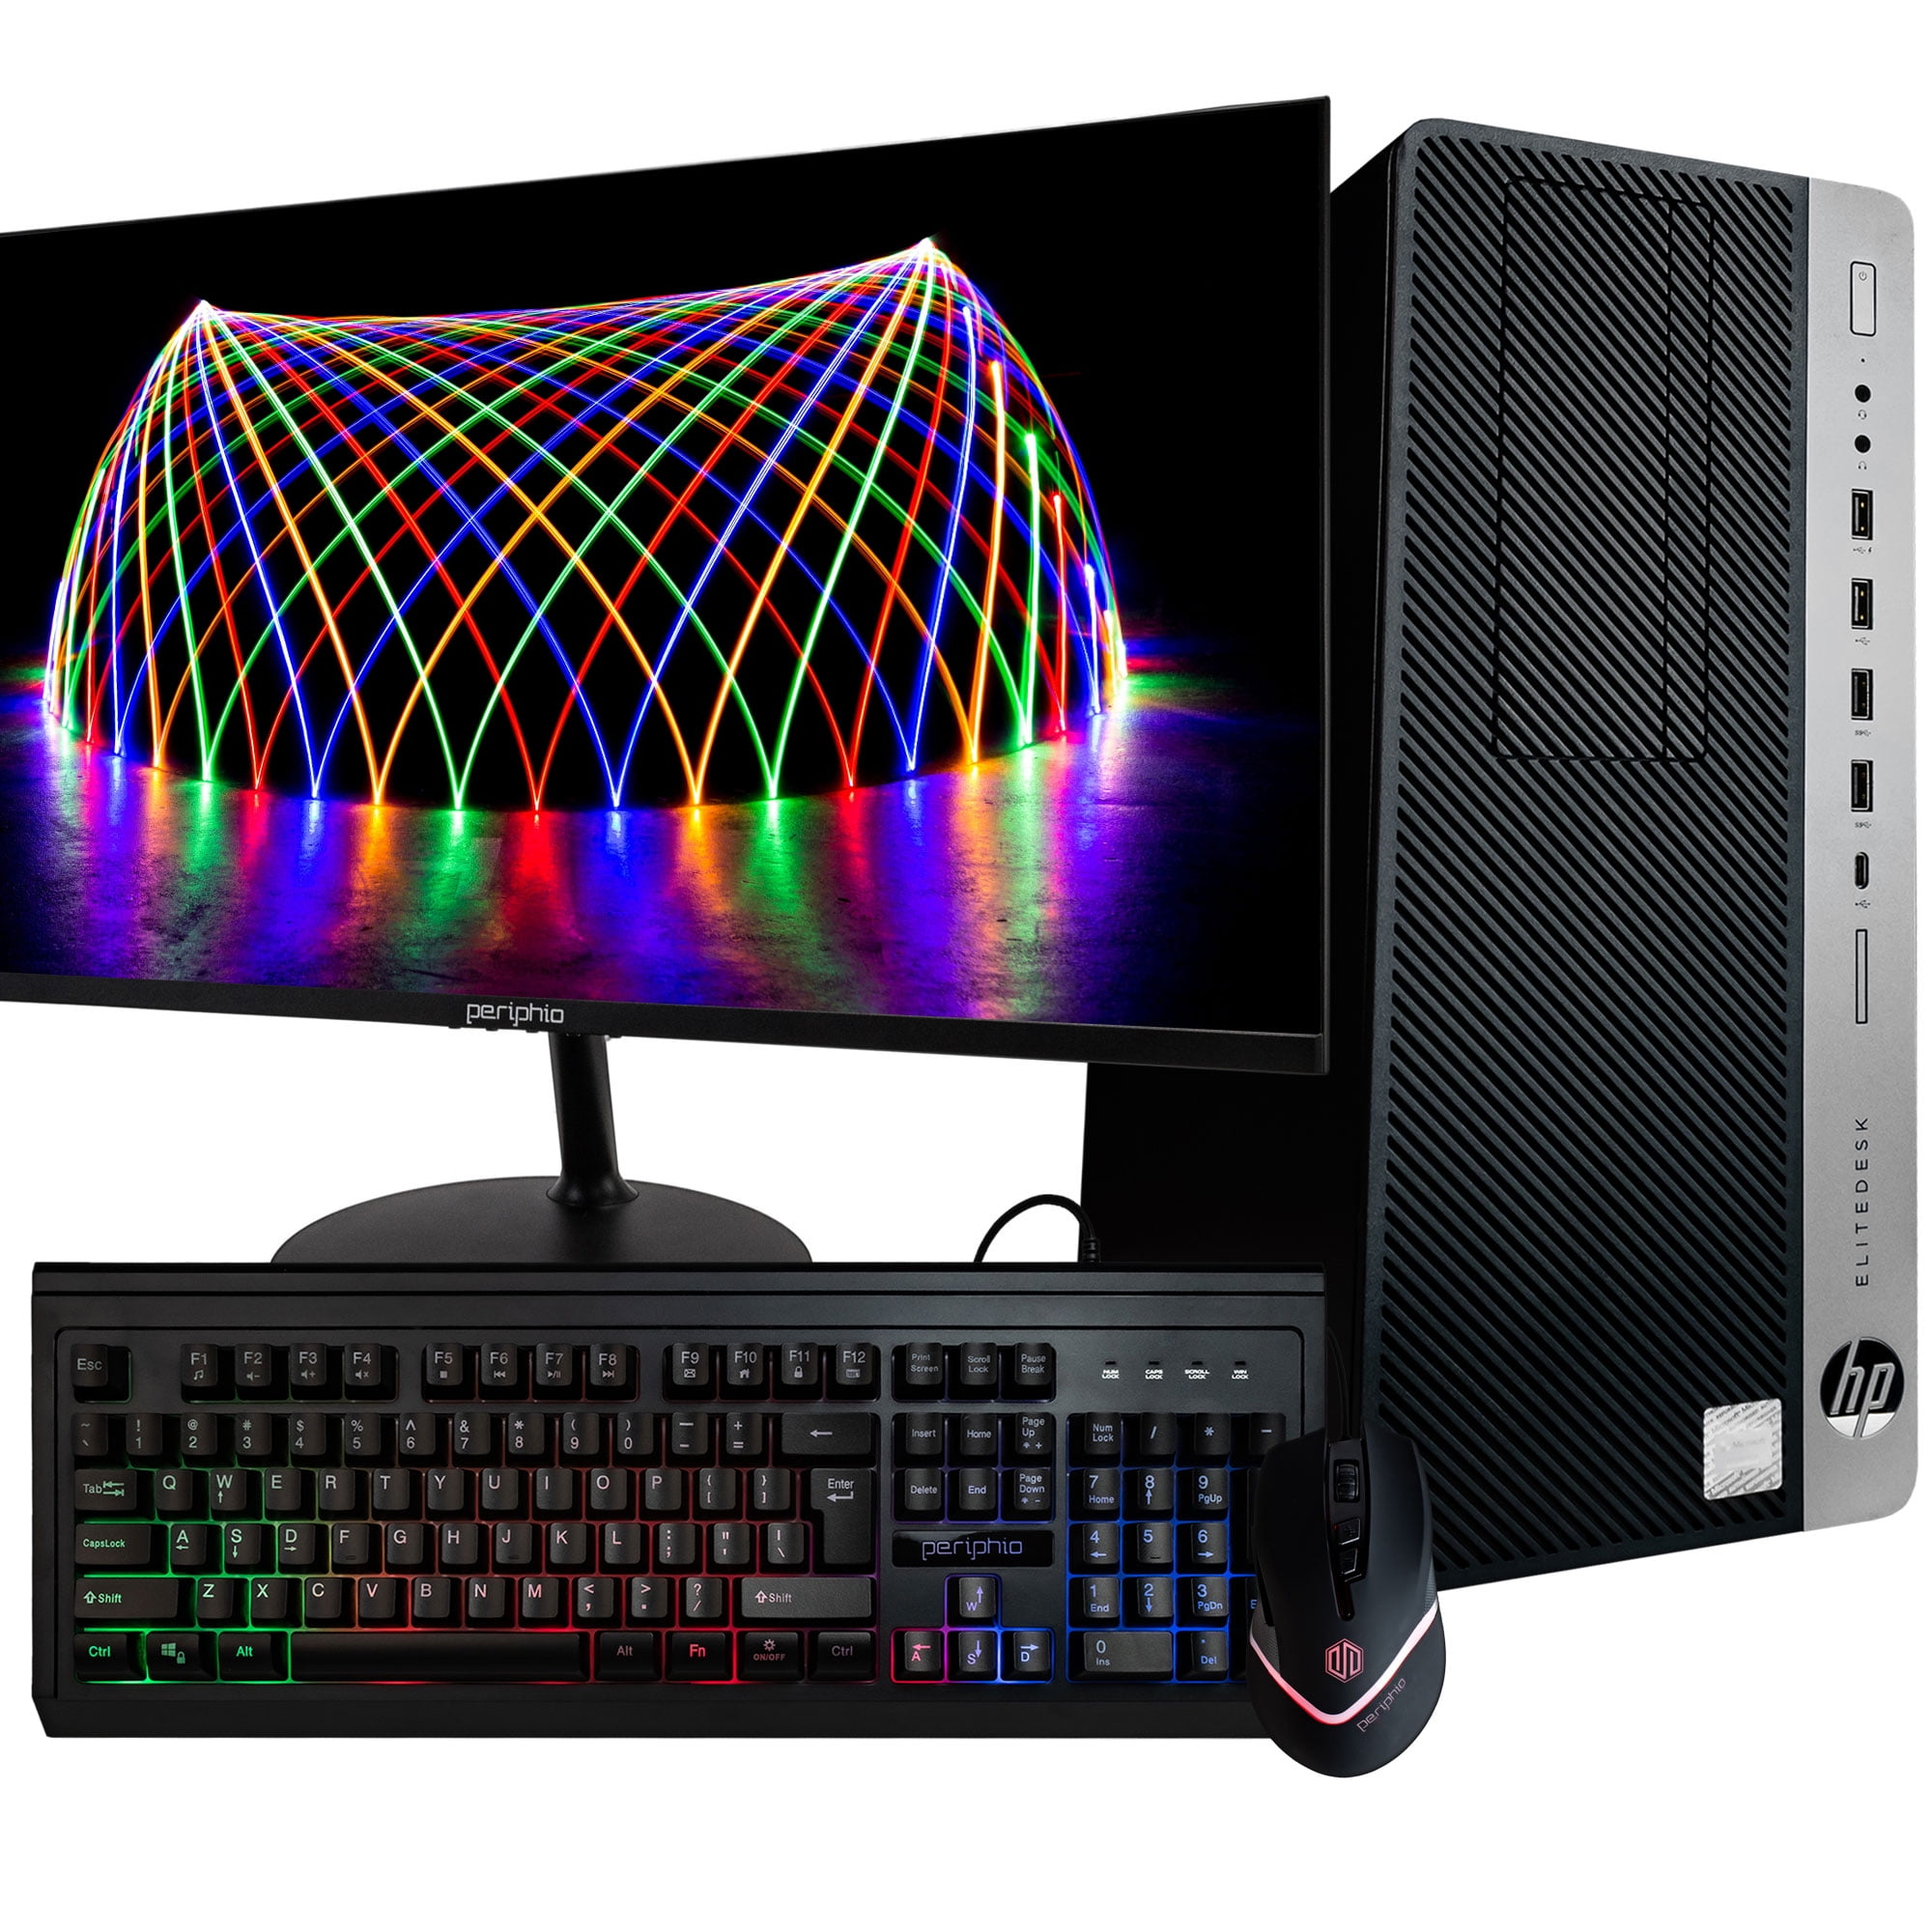  HP RGB Gaming Desktop PC, Intel Quad I7 up to 3.8Ghz